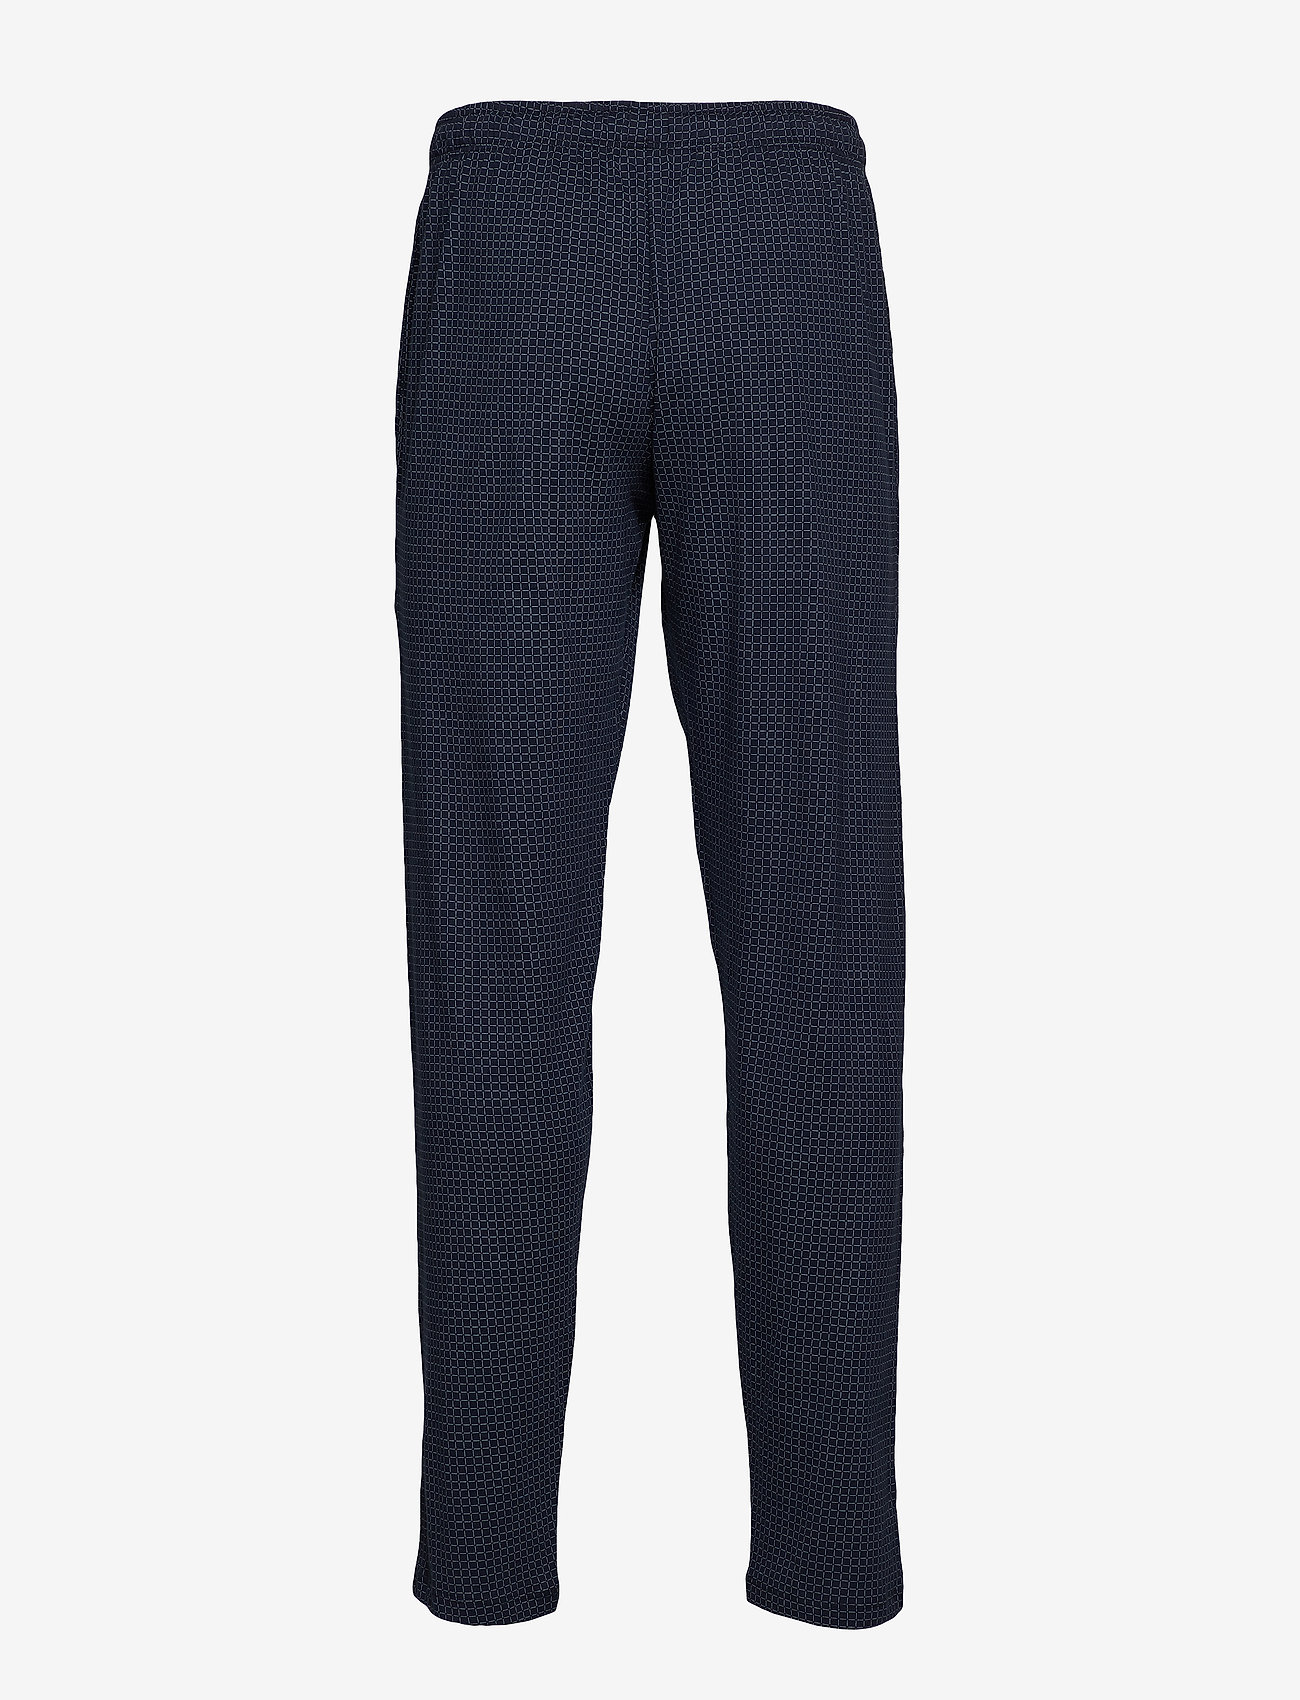 Schiesser - Long Pants - madalaimad hinnad - dark blue - 1